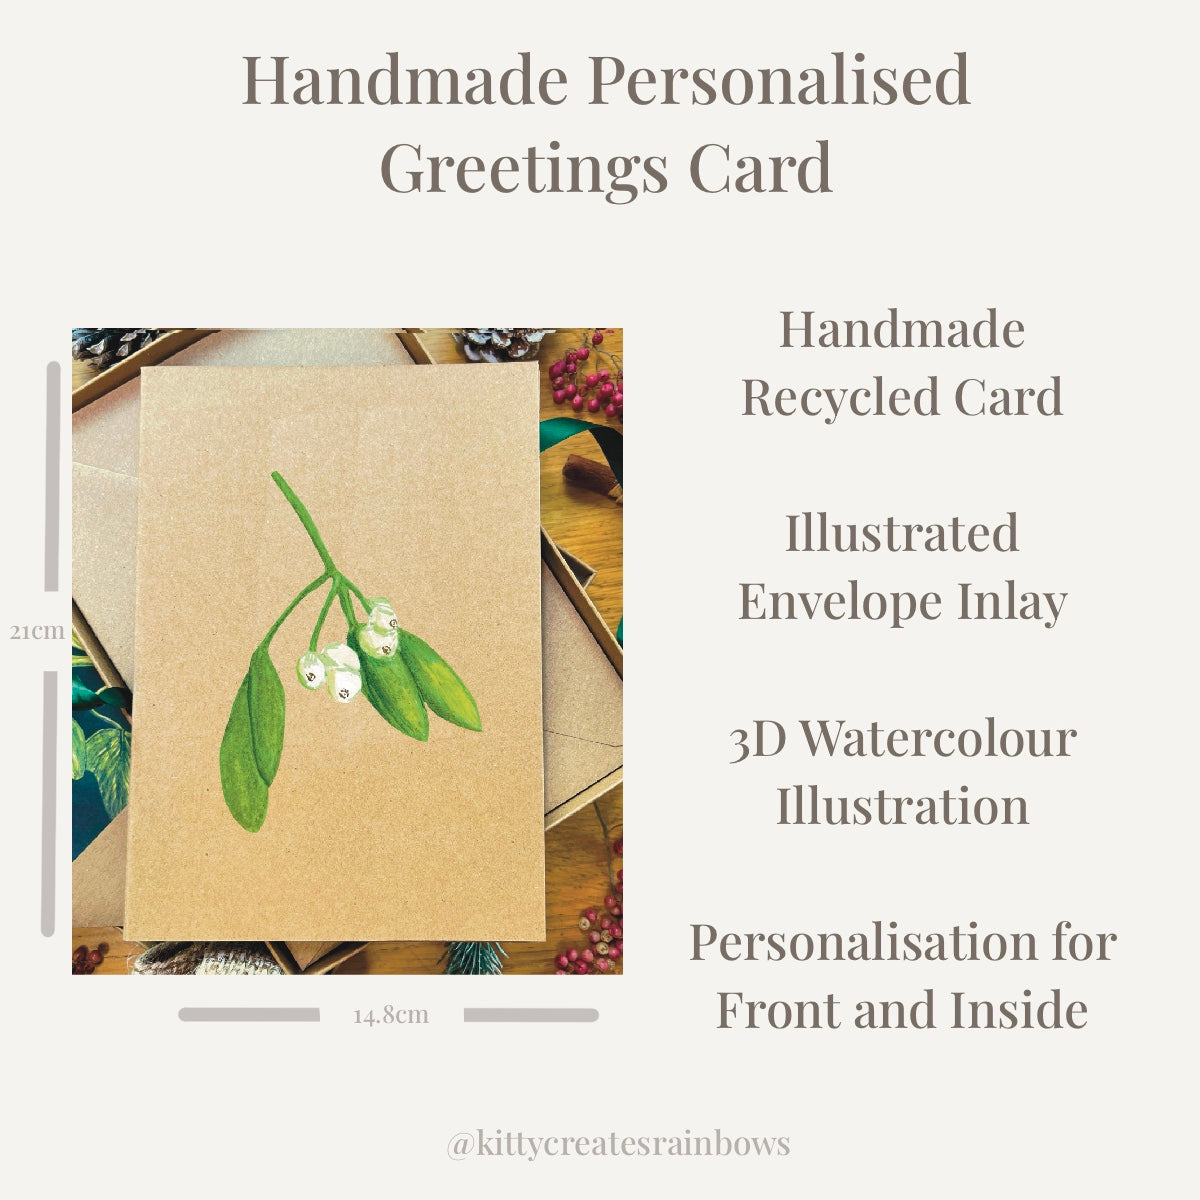 Infographic for mistletoe greetings card